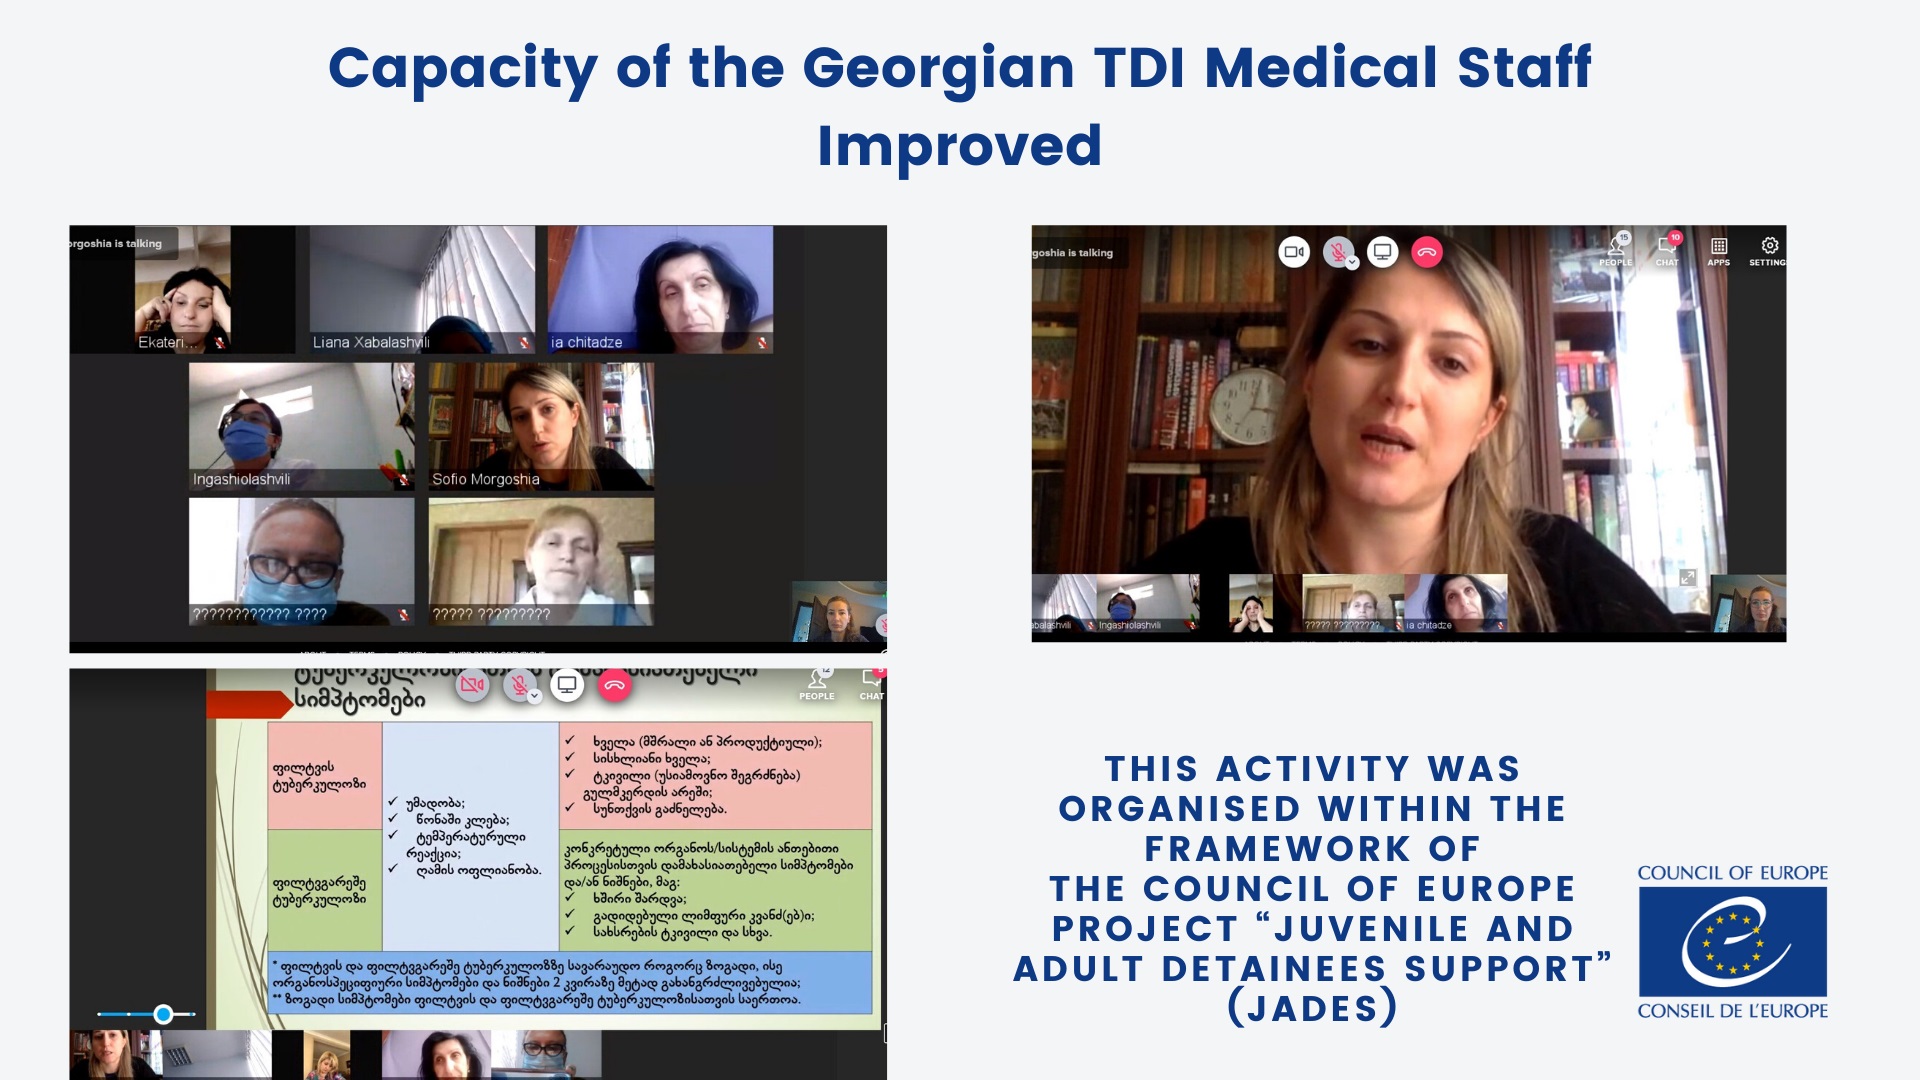 Professional Capacity of the Georgian TDI Medical Staff Improved